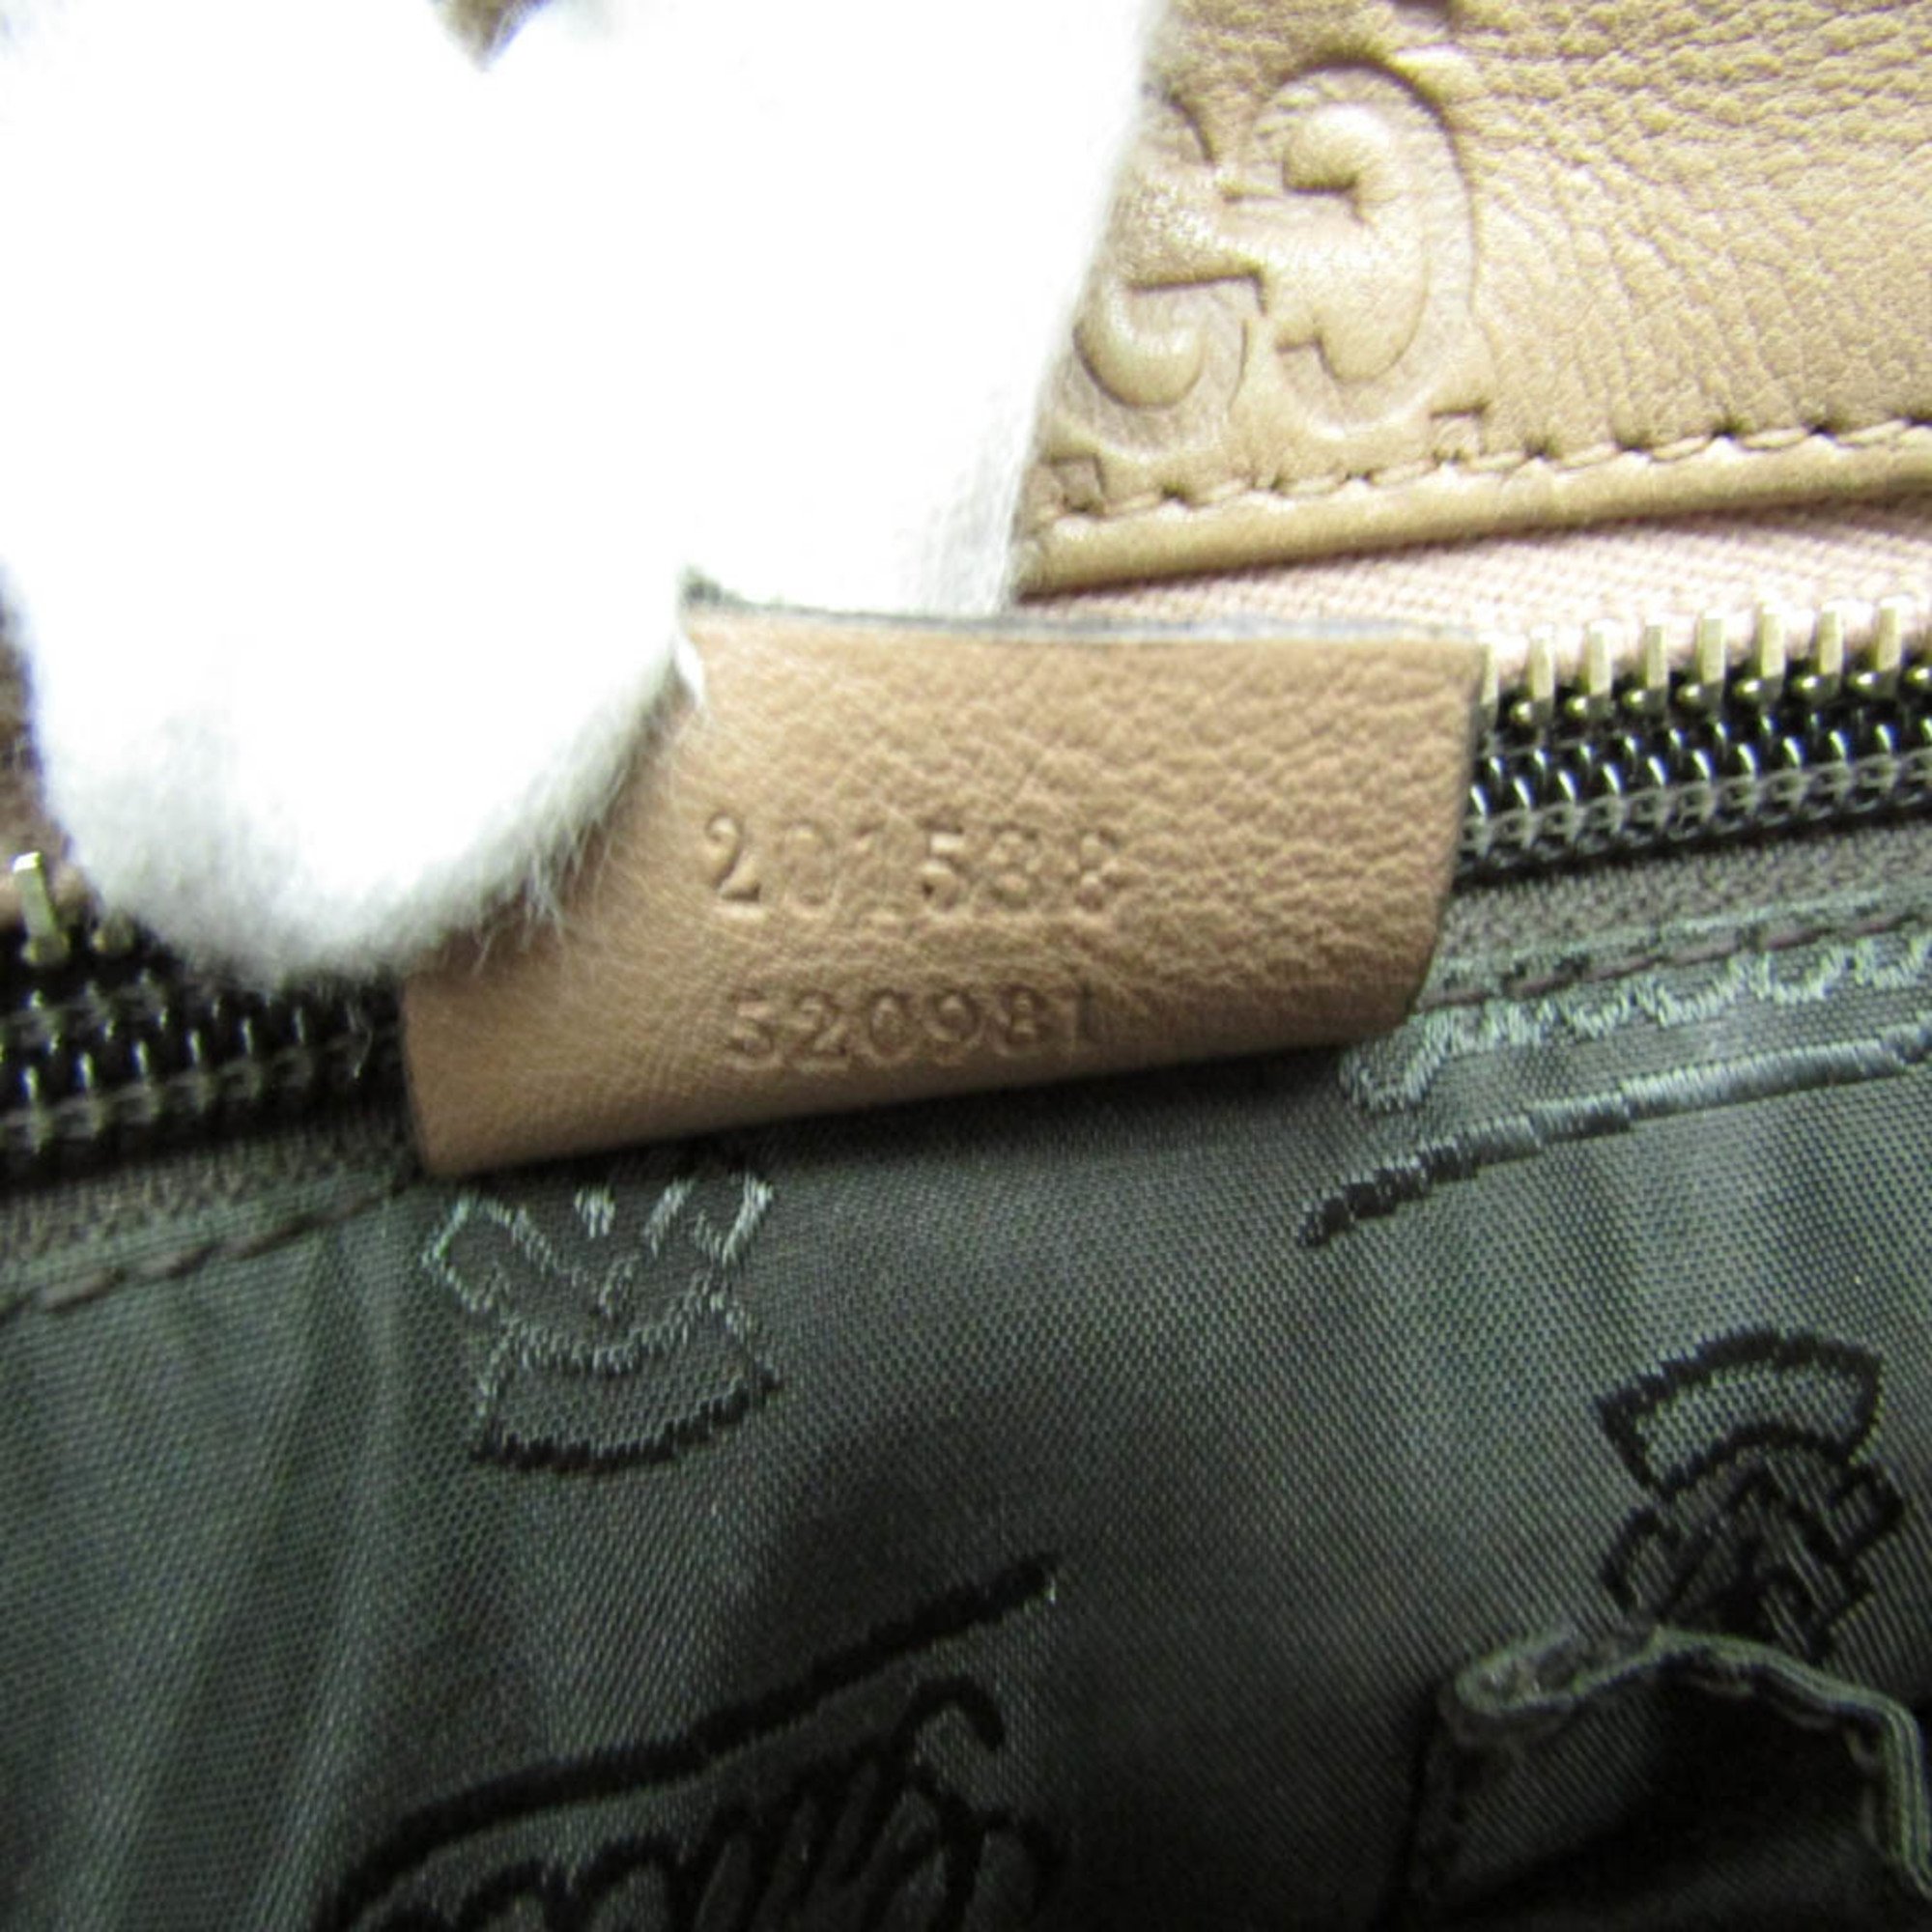 Gucci Guccissima 201538 Women's Leather Shoulder Bag Pink Beige